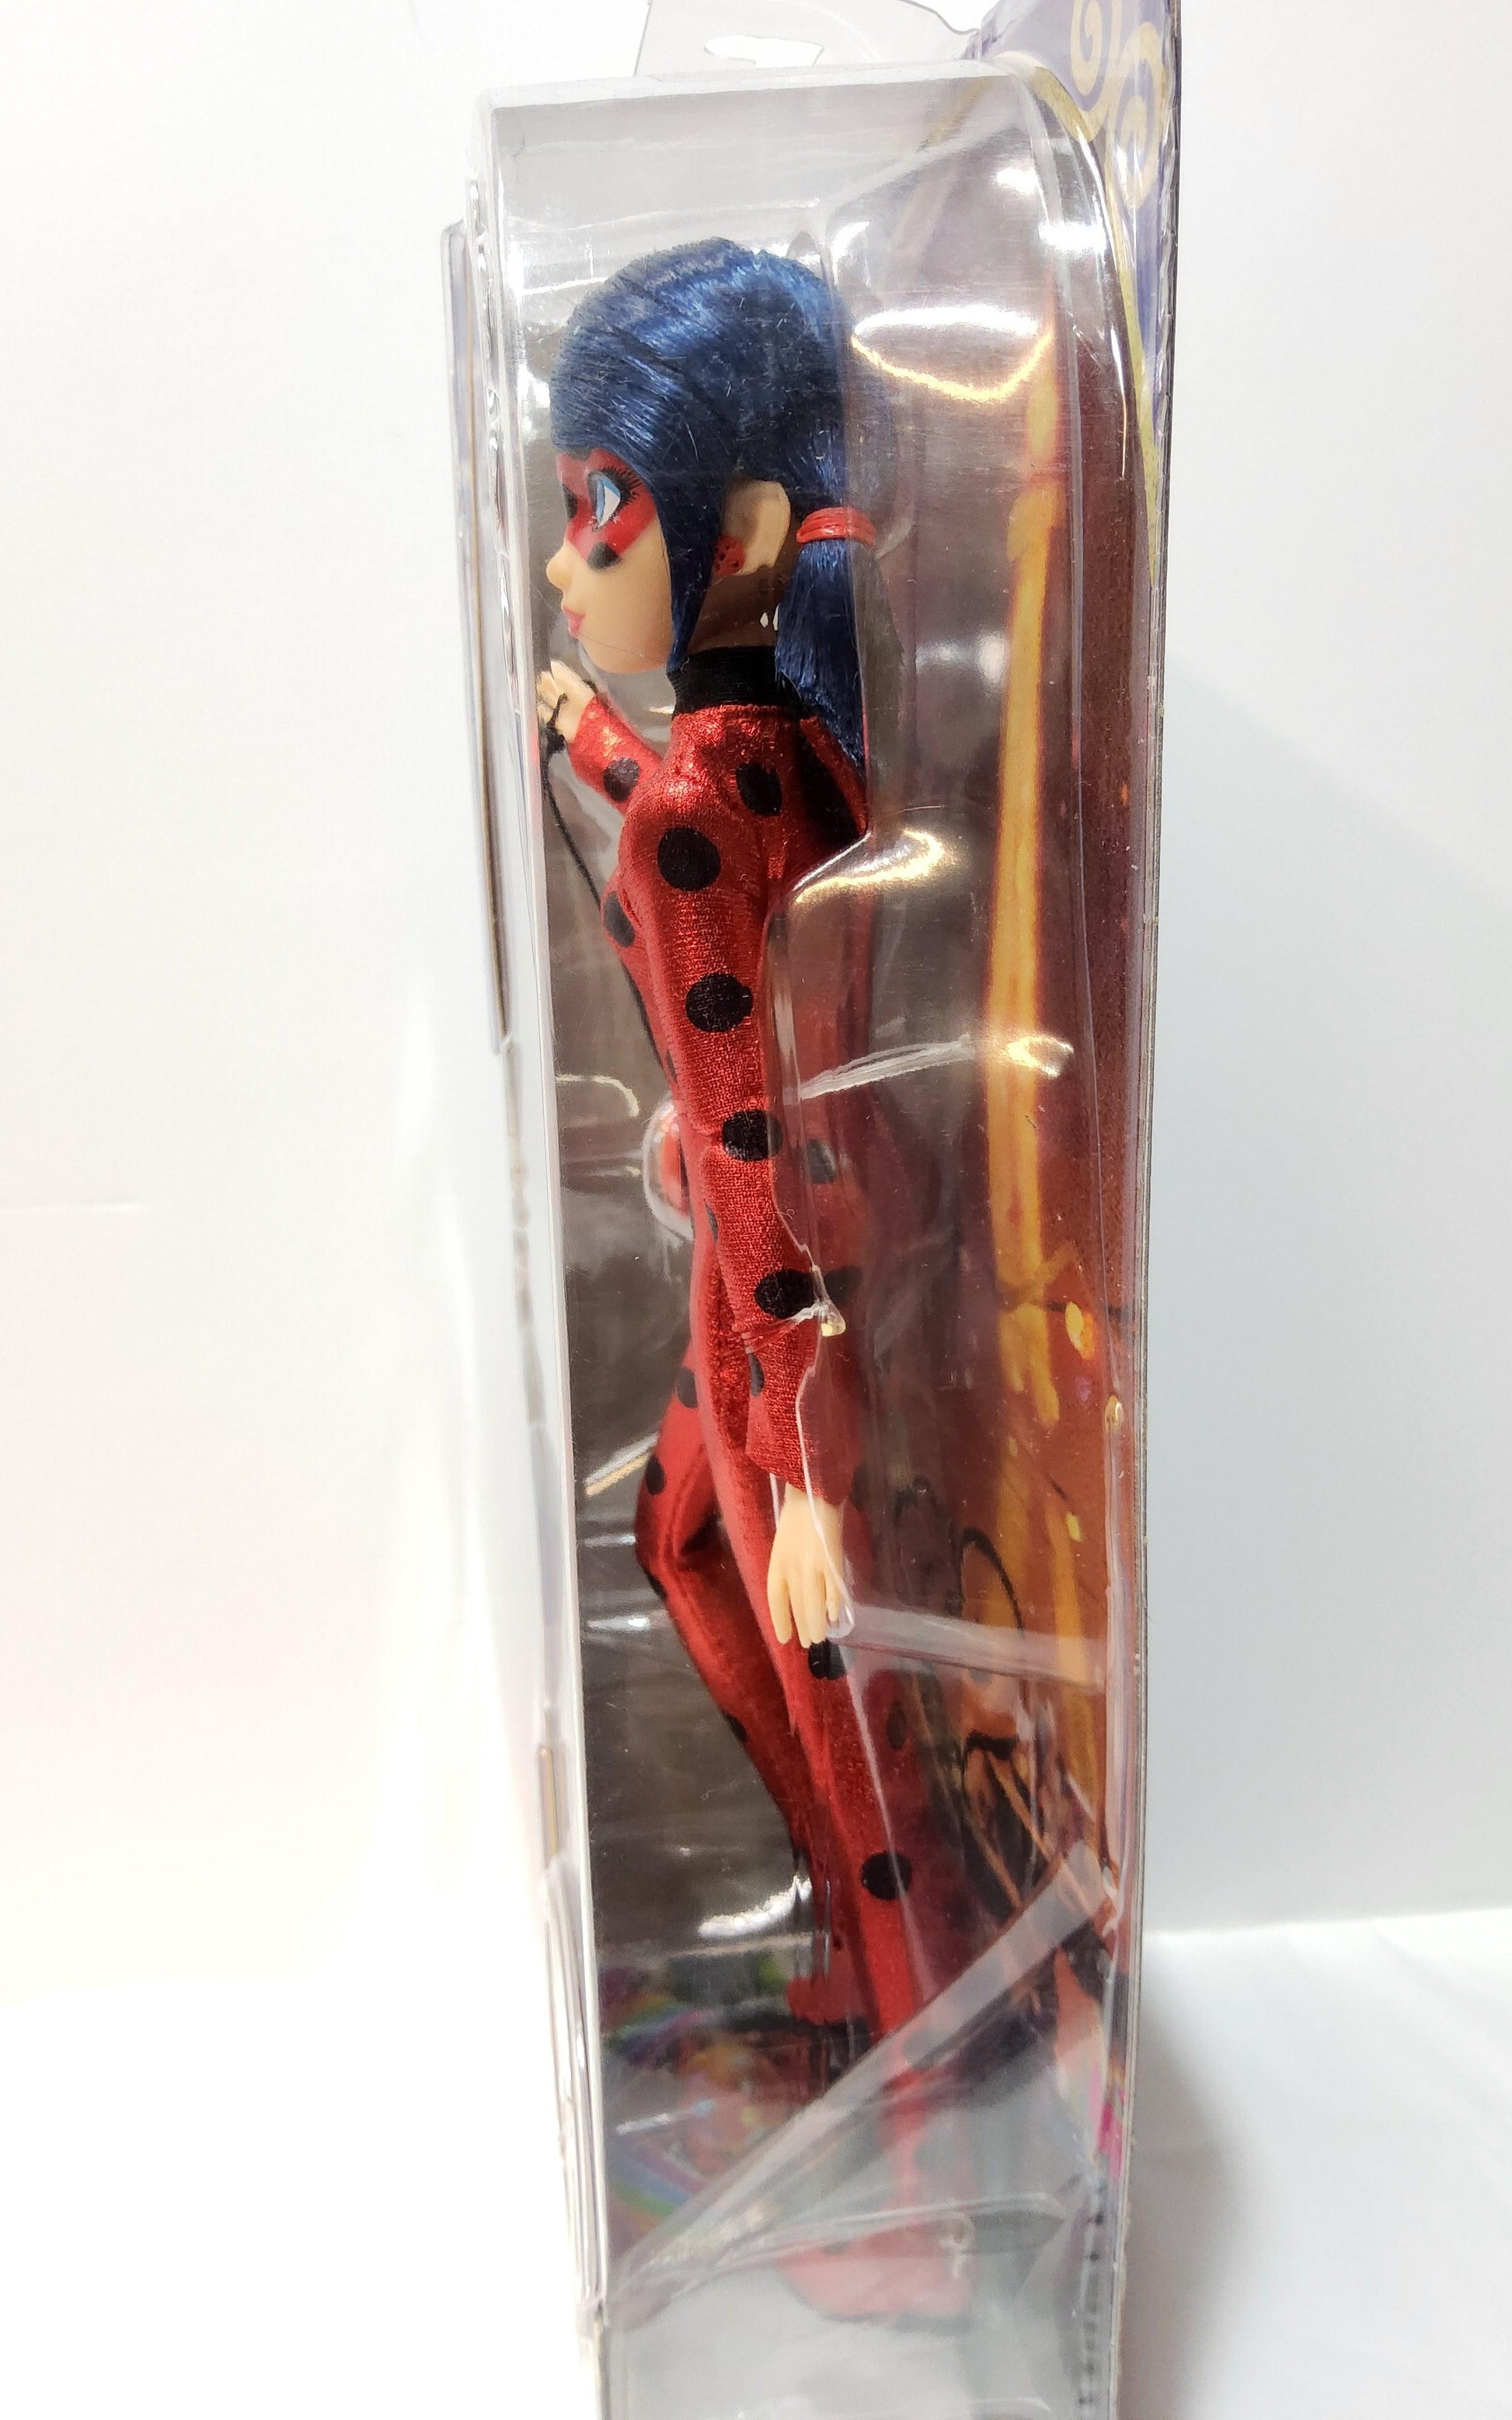 Playmates Miraculous Ladybug Cat Noir The Movie 12" Exclusive Ladybug Doll - Logan's Toy Chest